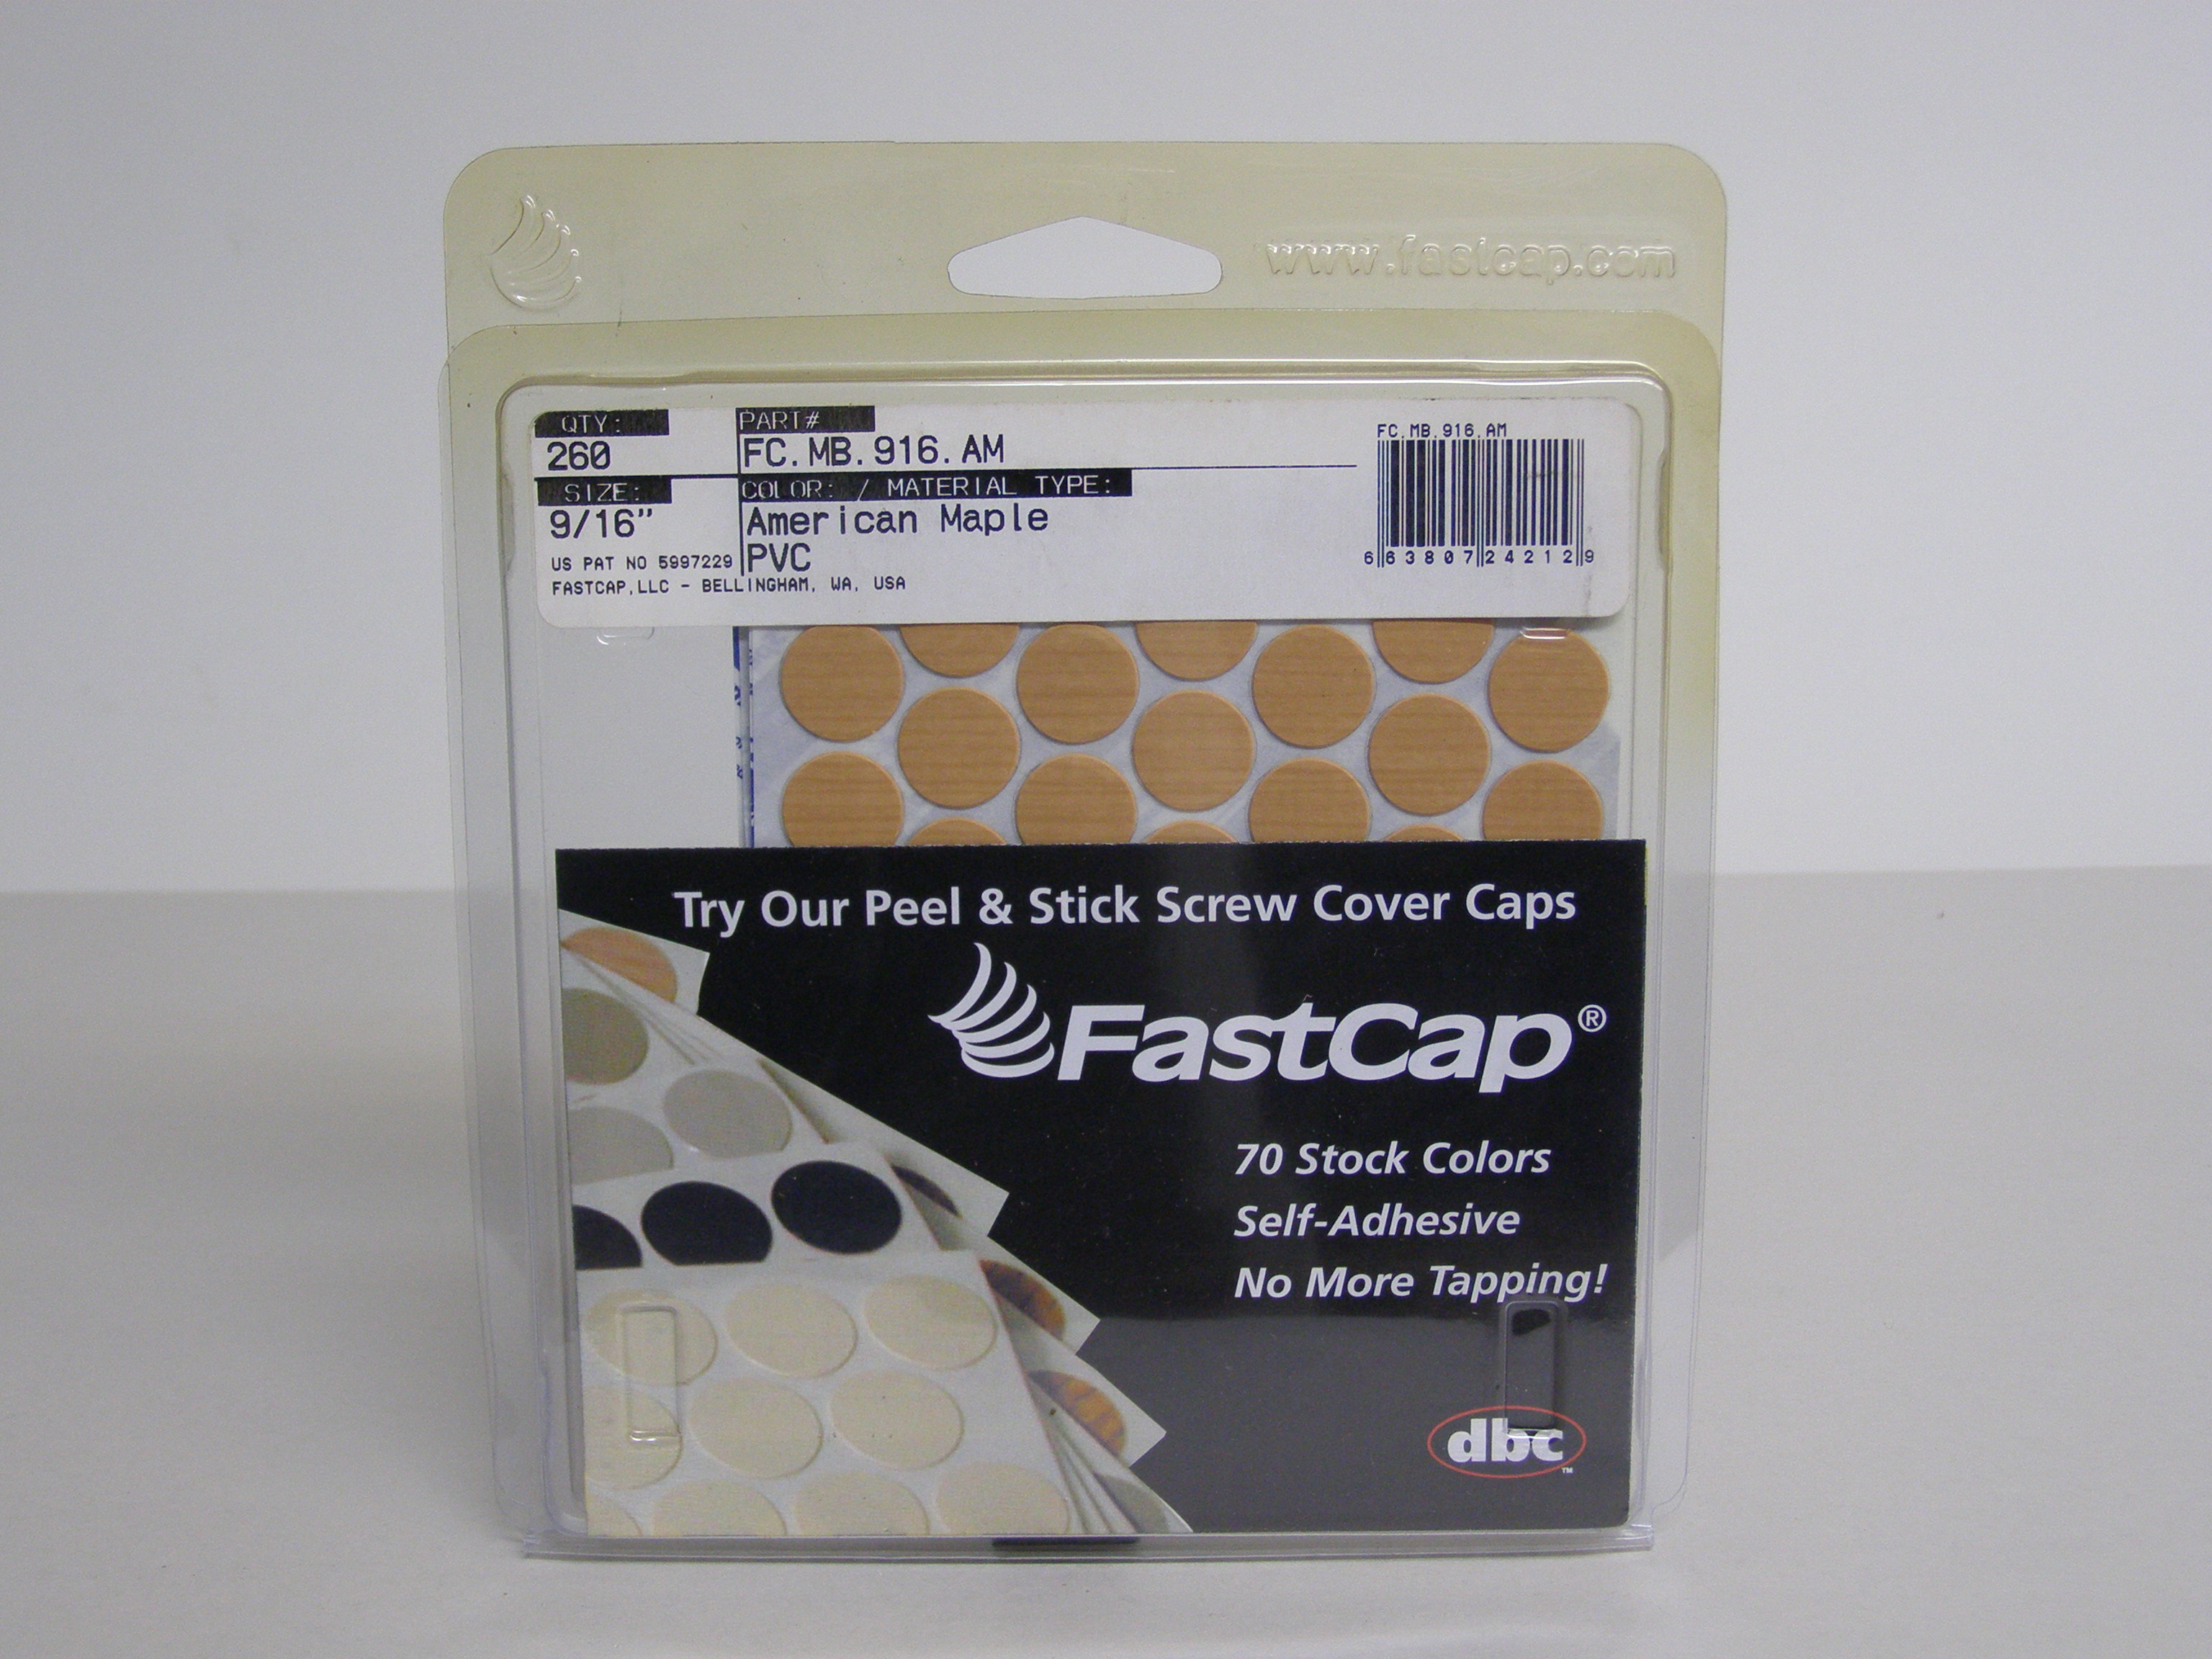 FastCap FC.MB.916.AM American Maple Screw Caps Peel &amp; Stick PVC Screw Cover Caps 9/16&quot; 260 Caps
FC.MB.916.AM